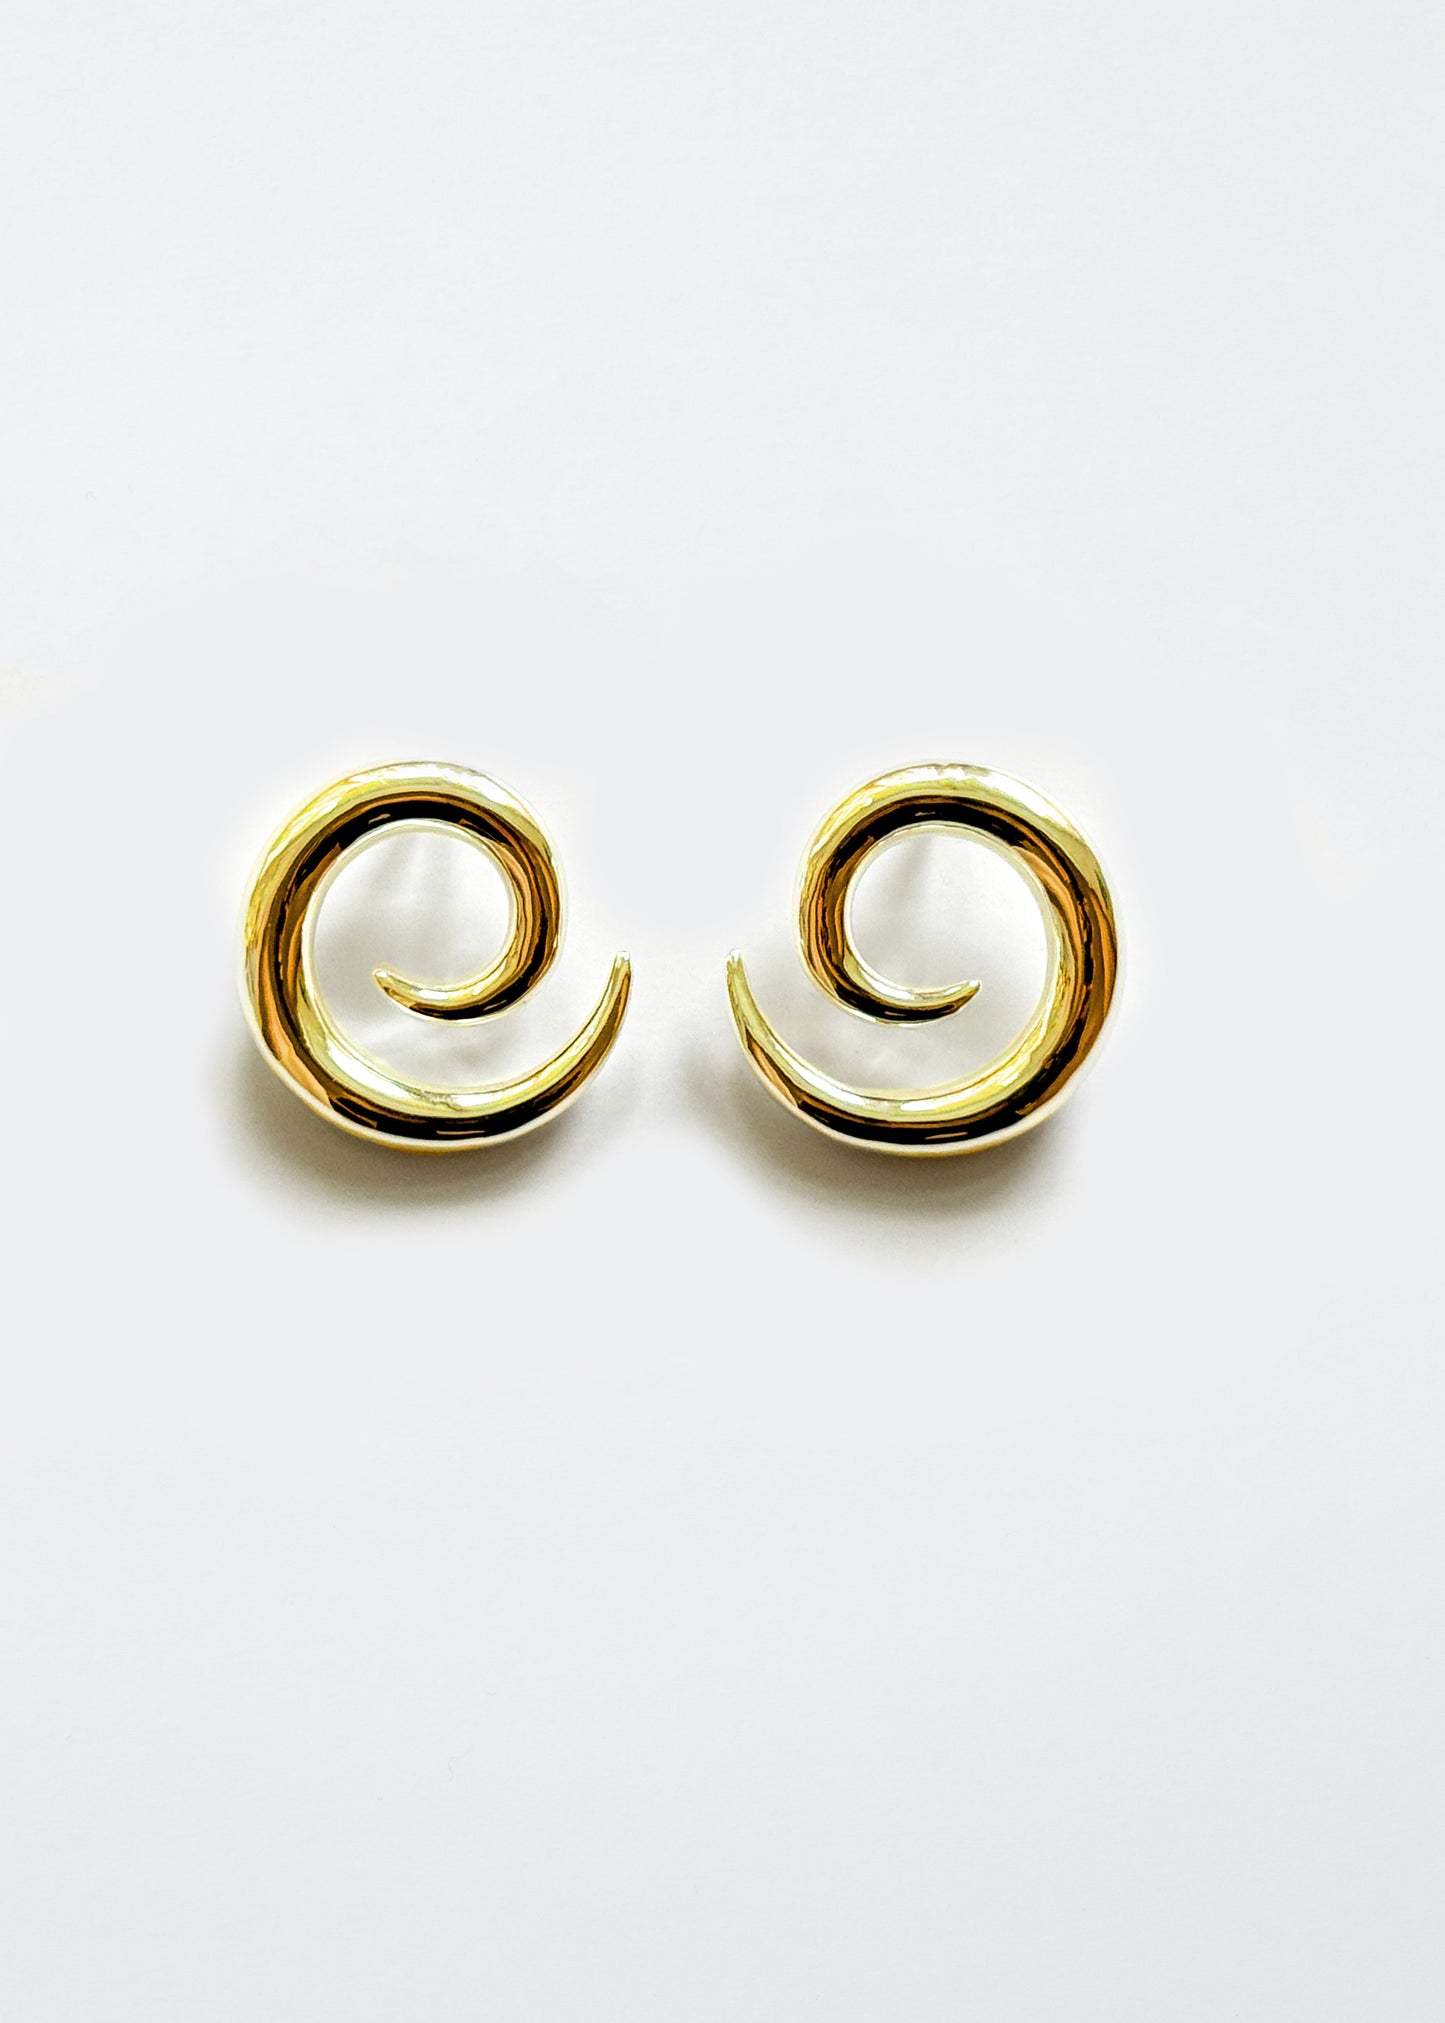 Spiral earrings - Gold - Pair